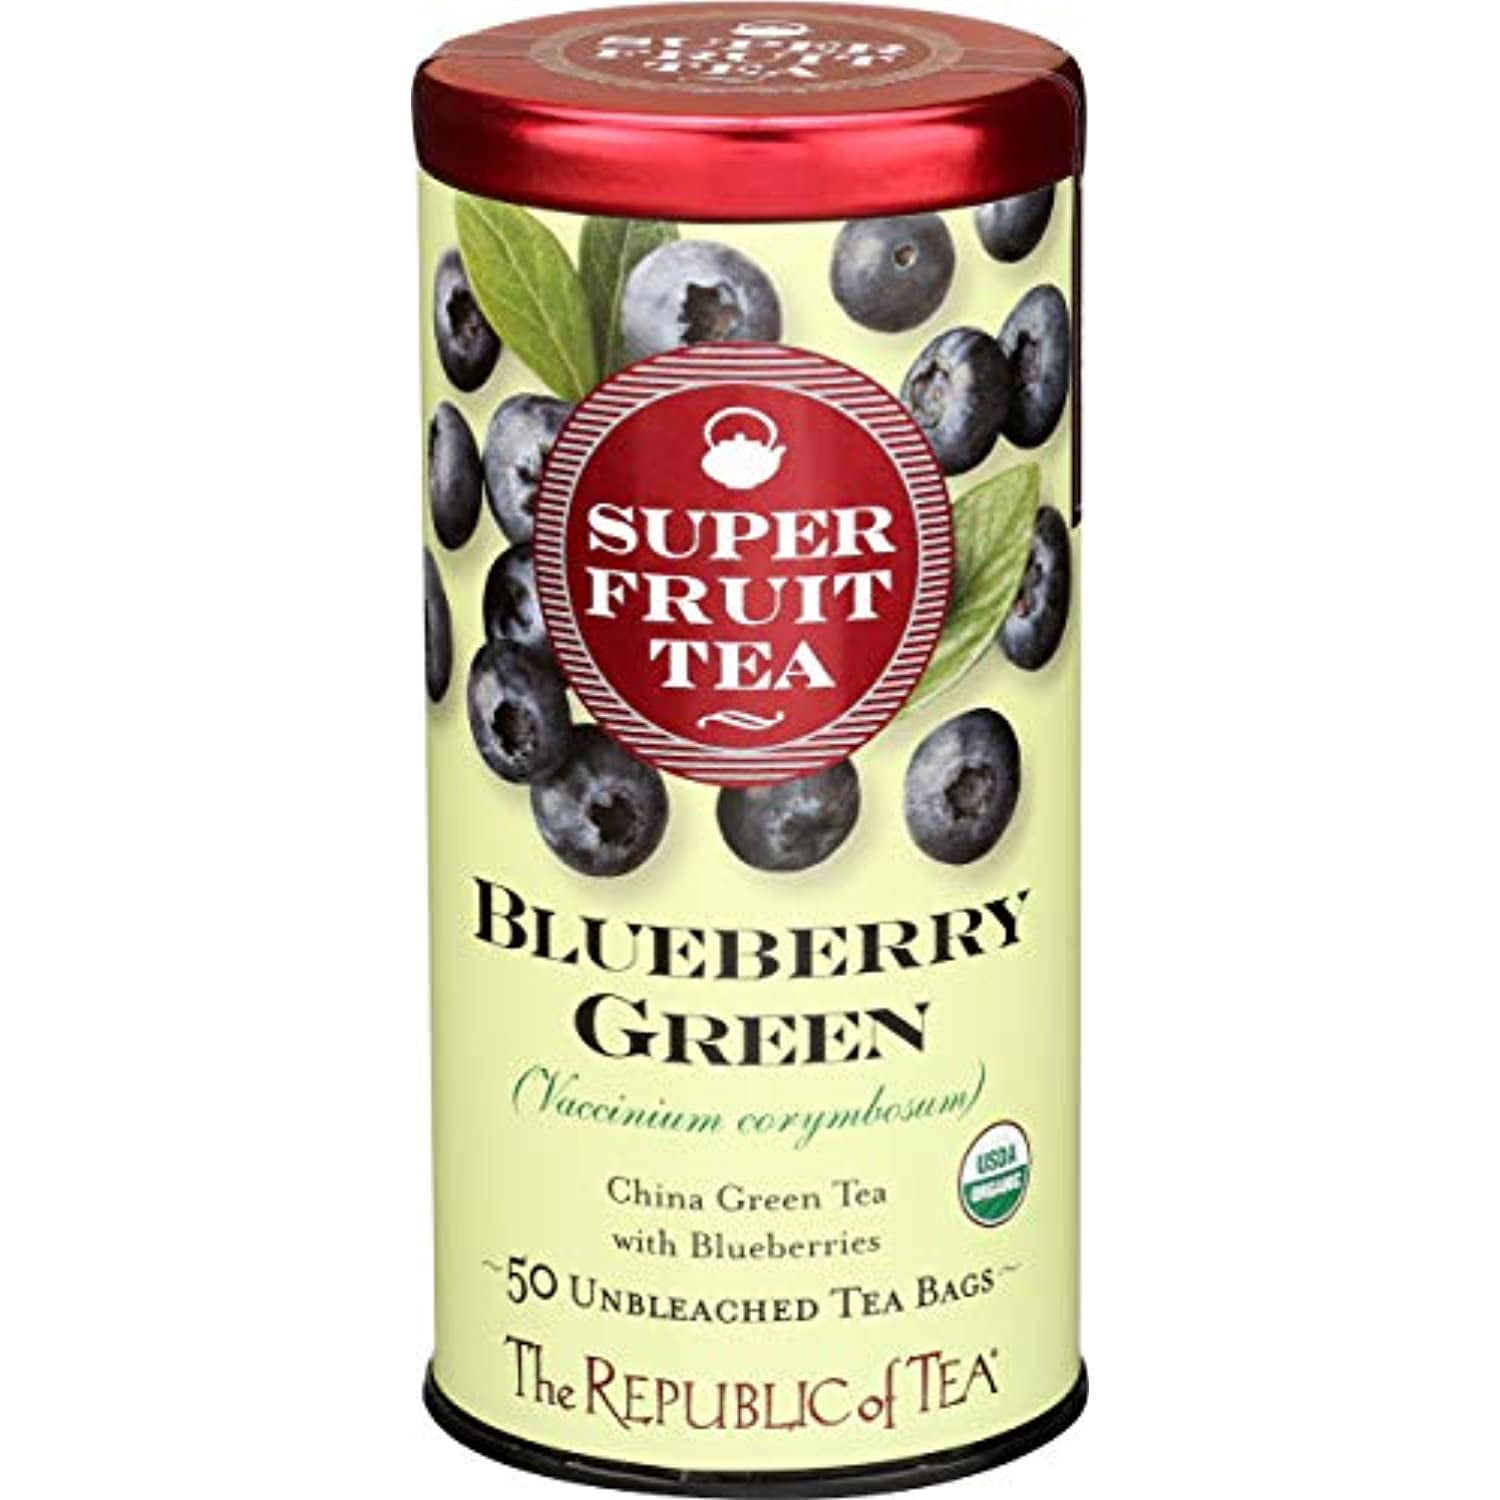 Organic Blueberry Green Tea 50 String & Tag Tea Bags Brew La La Tea Vegan